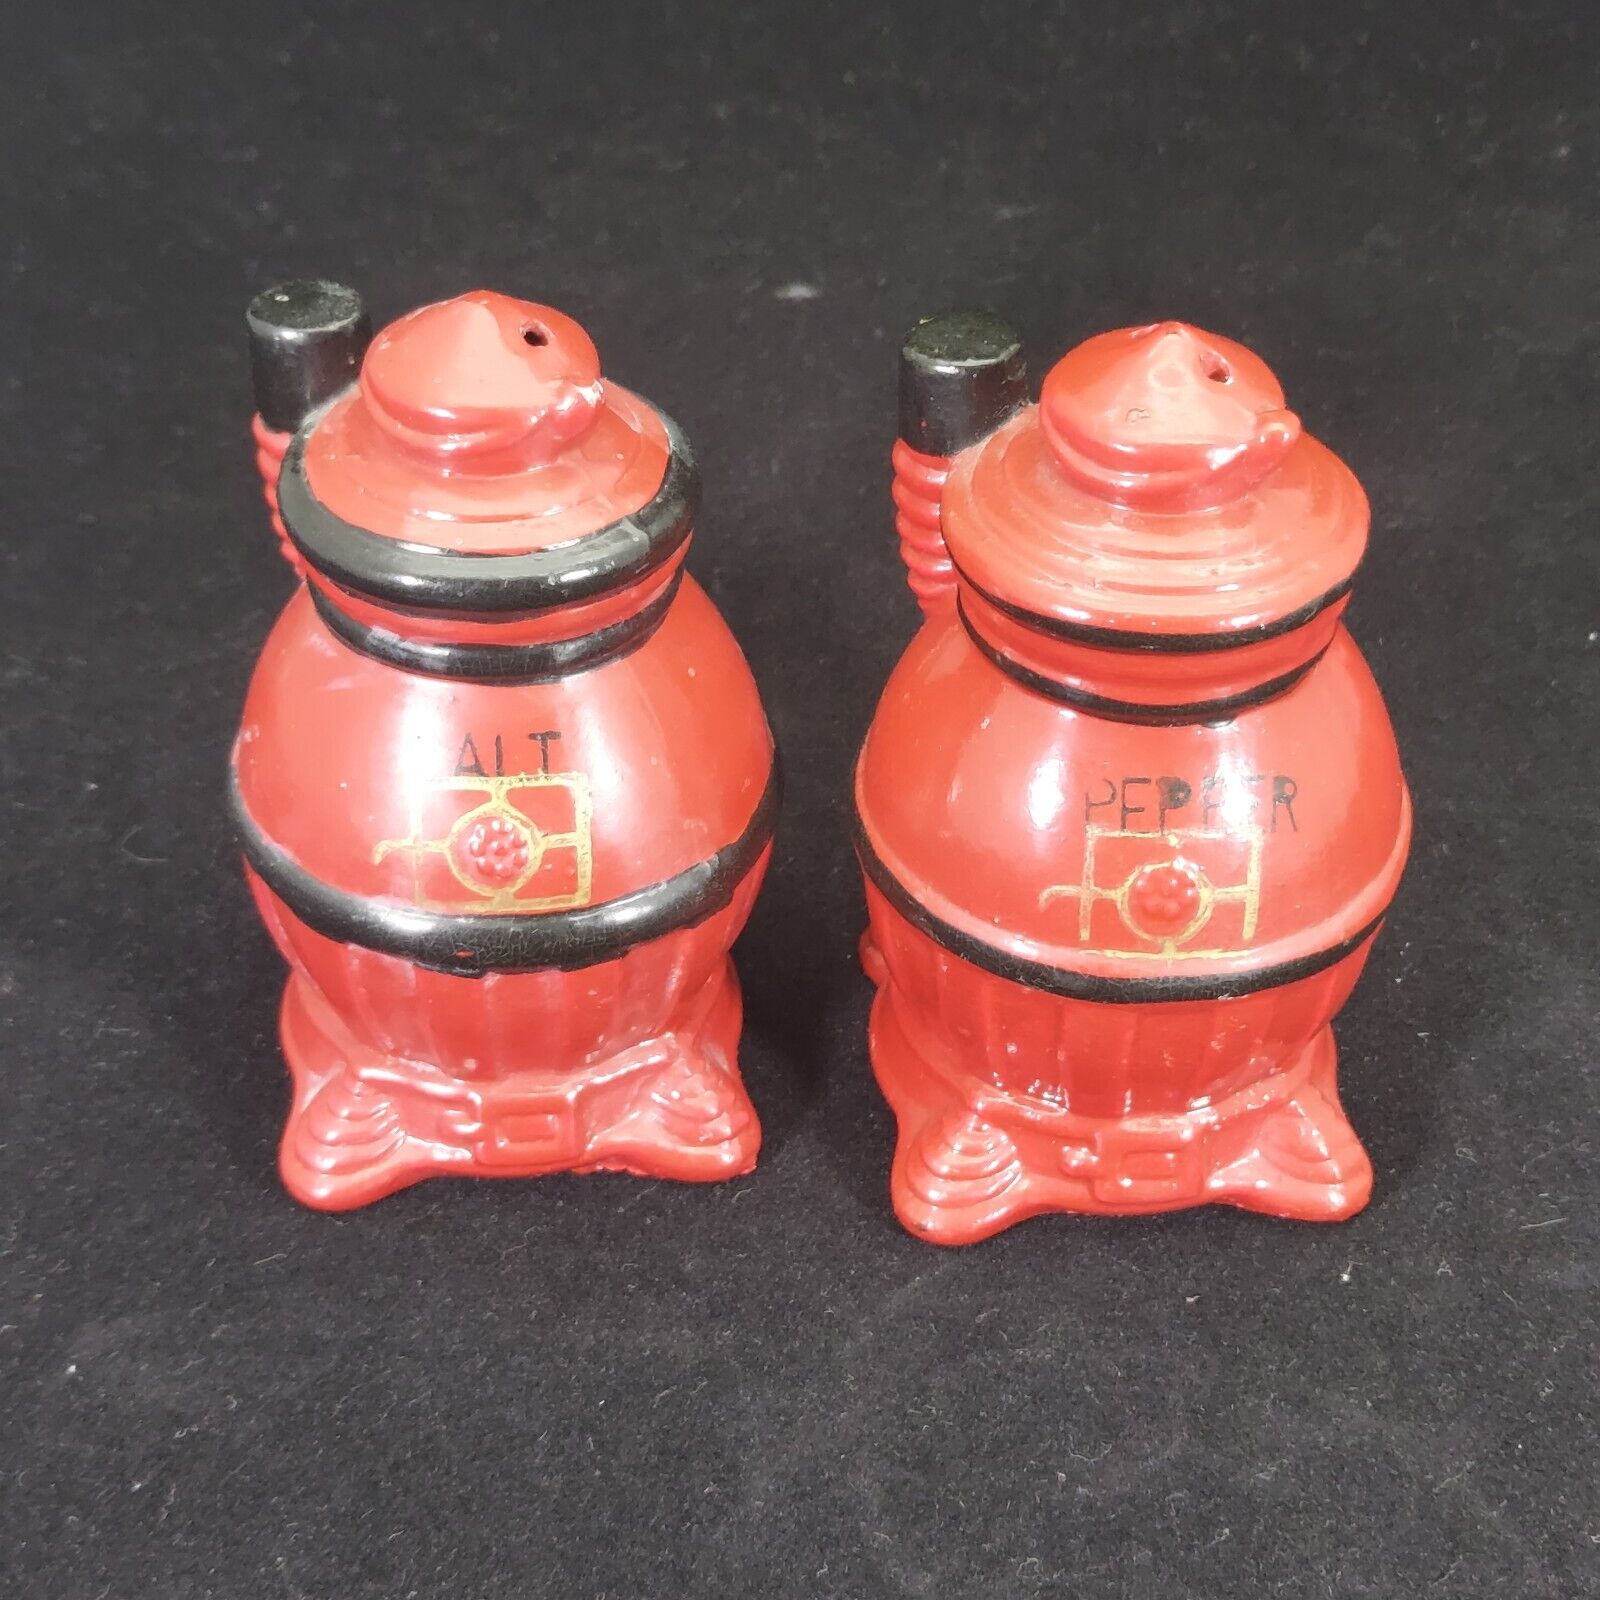 Vintage Ceramic Red Pot Belly Stove Salt & Pepper Shakers Our Own Import Japan